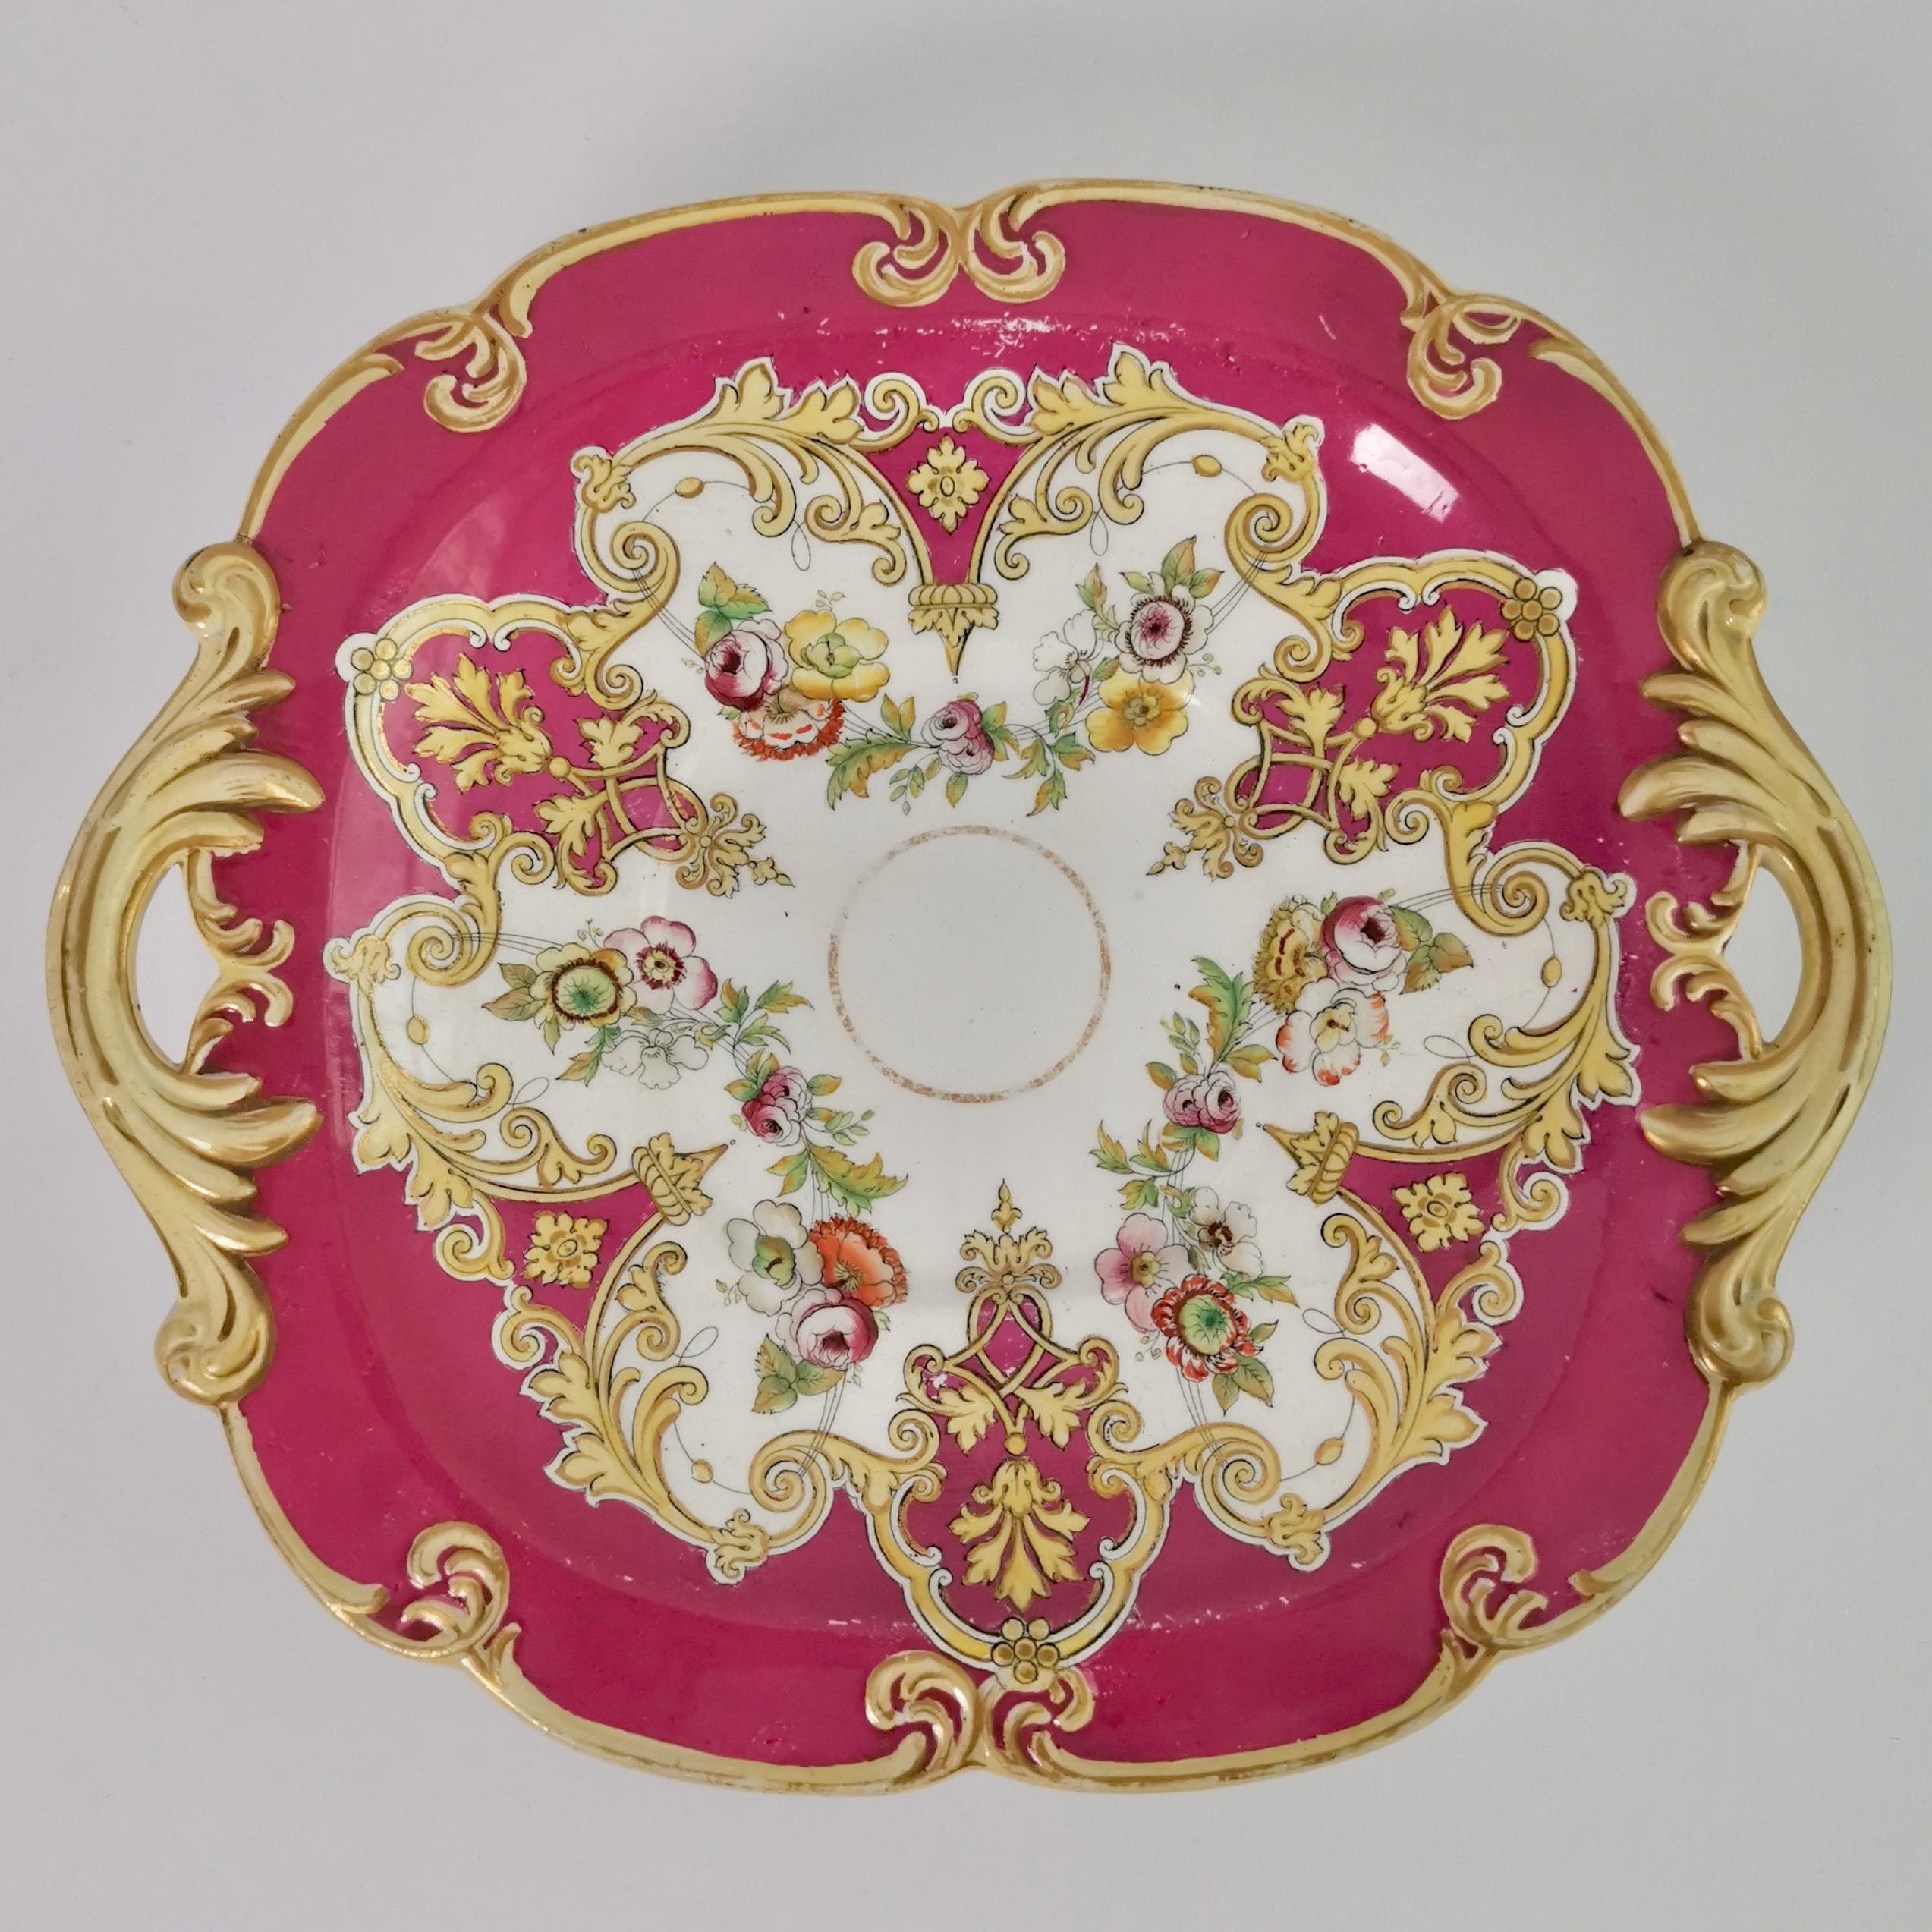 Late 19th Century Ridgway Earthenware Dessert Service, Fuchsia Pink, Floral Festoons, ca 1870